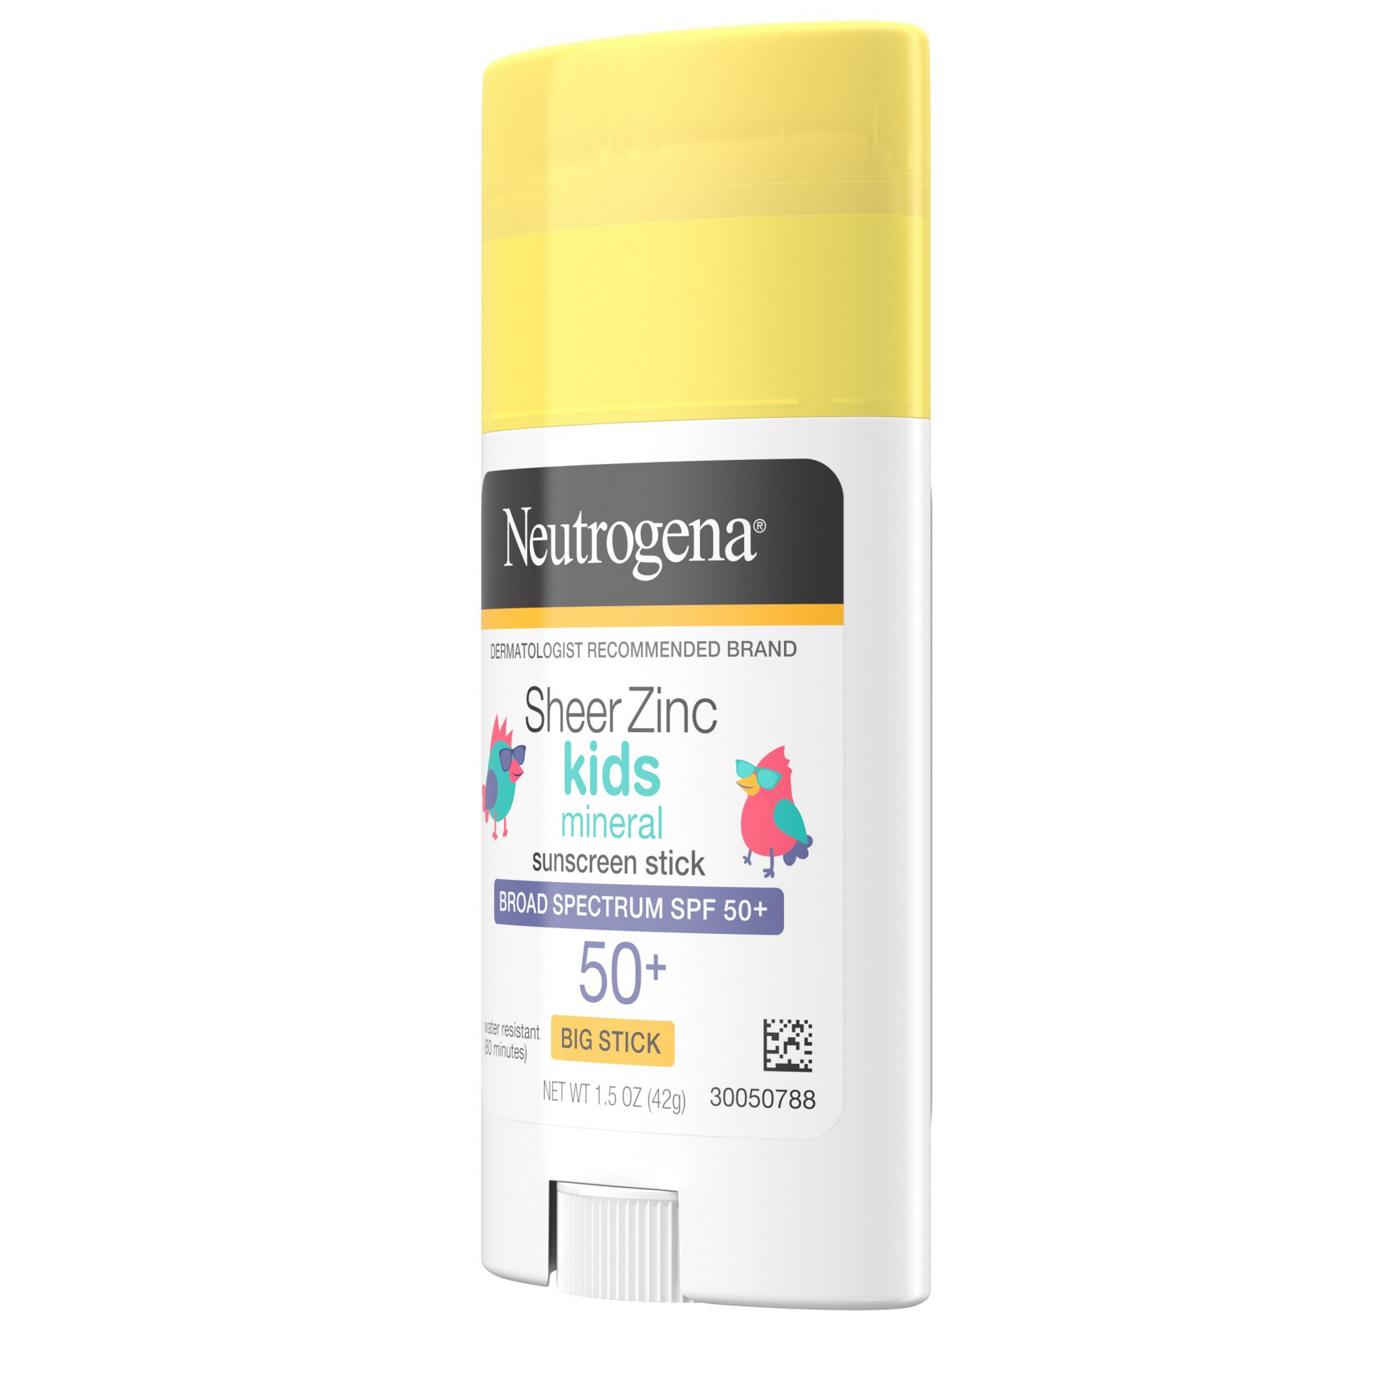 Neutrogena Sheer Zinc Kids Mineral Sunscreen Stick - SPF 50+; image 2 of 8